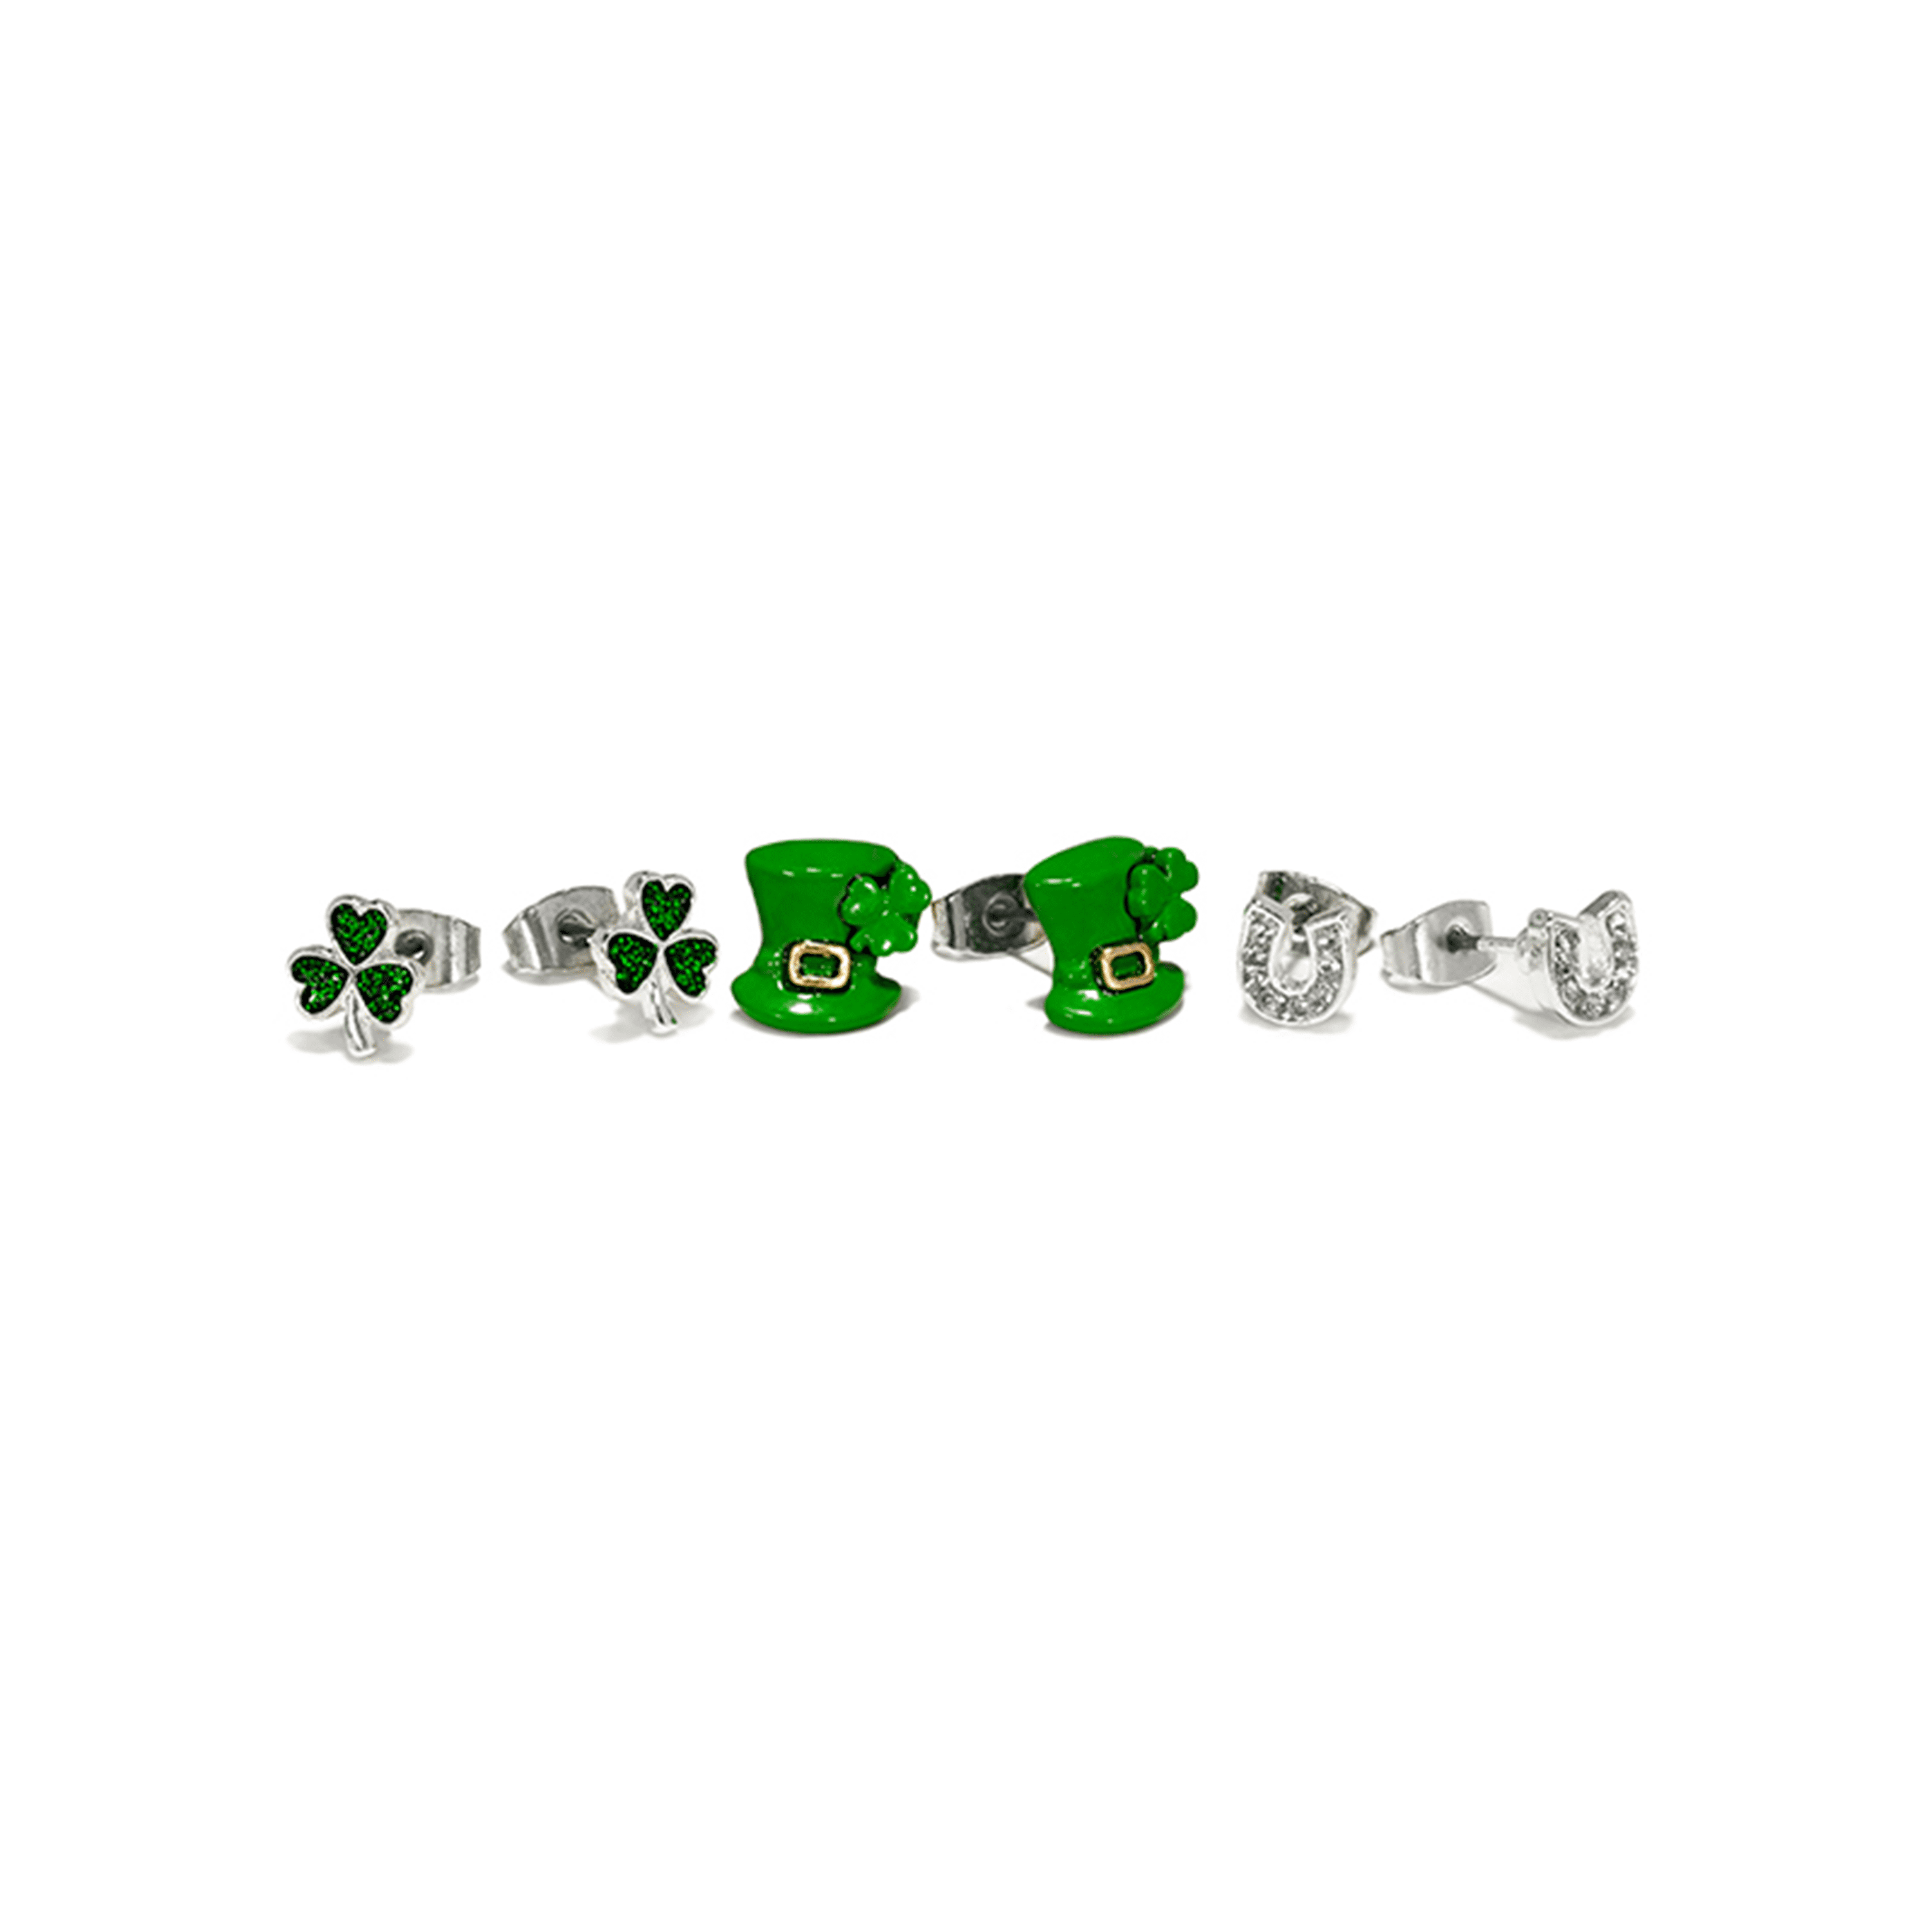 St. Patrick's Day Earrings – Lemondrop Designs